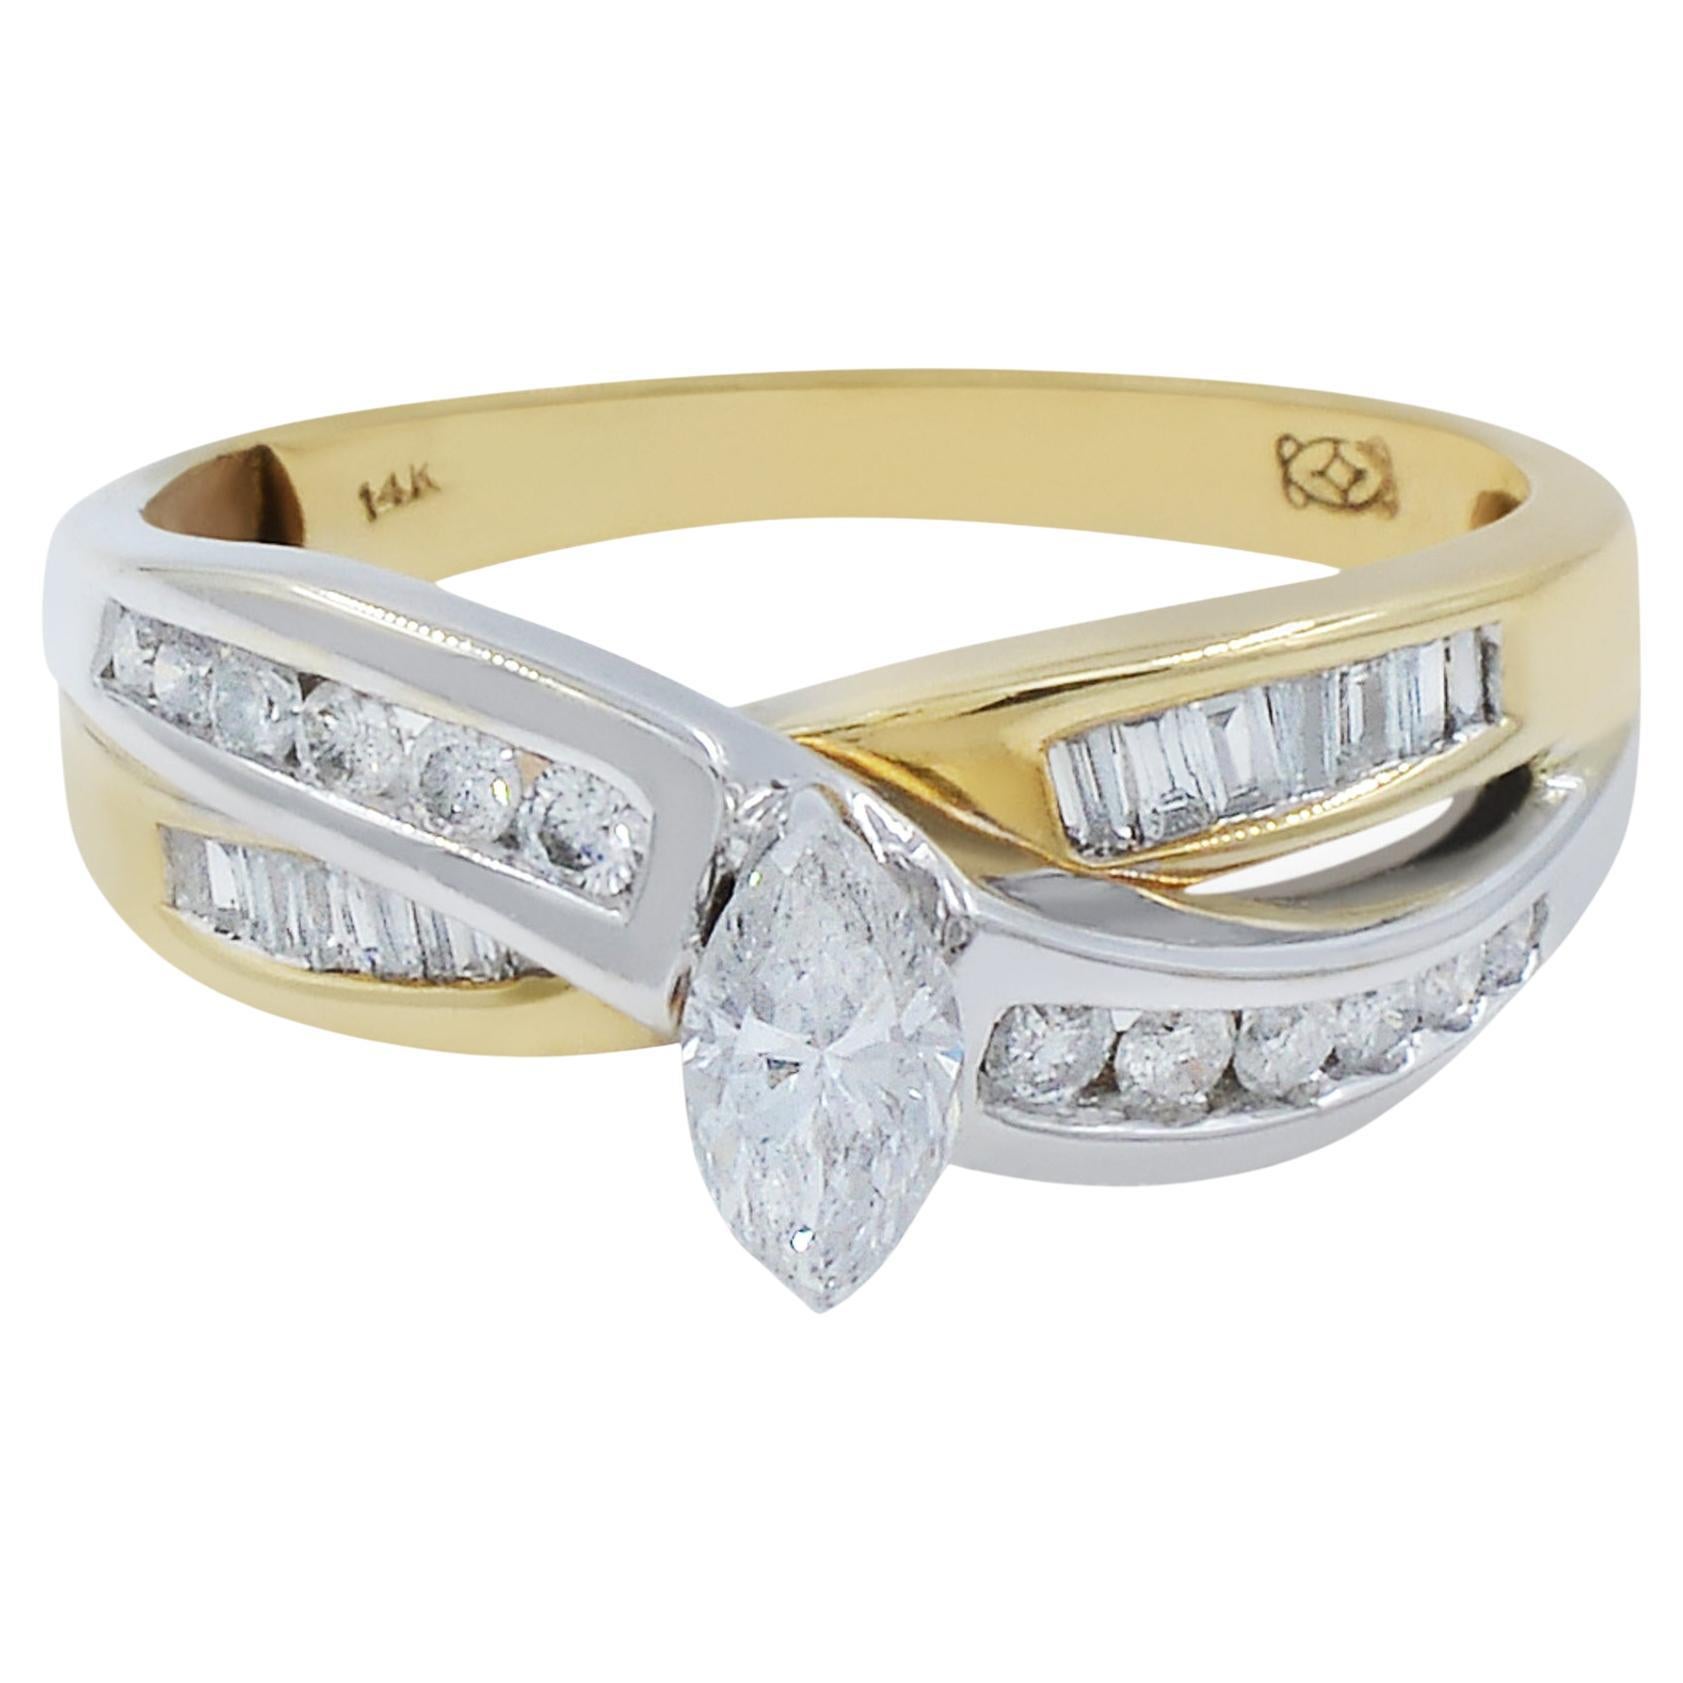 Rachel Koen Marquise Cut Diamond Engagement Ring Set 14K Yellow Gold 1.05Cttw